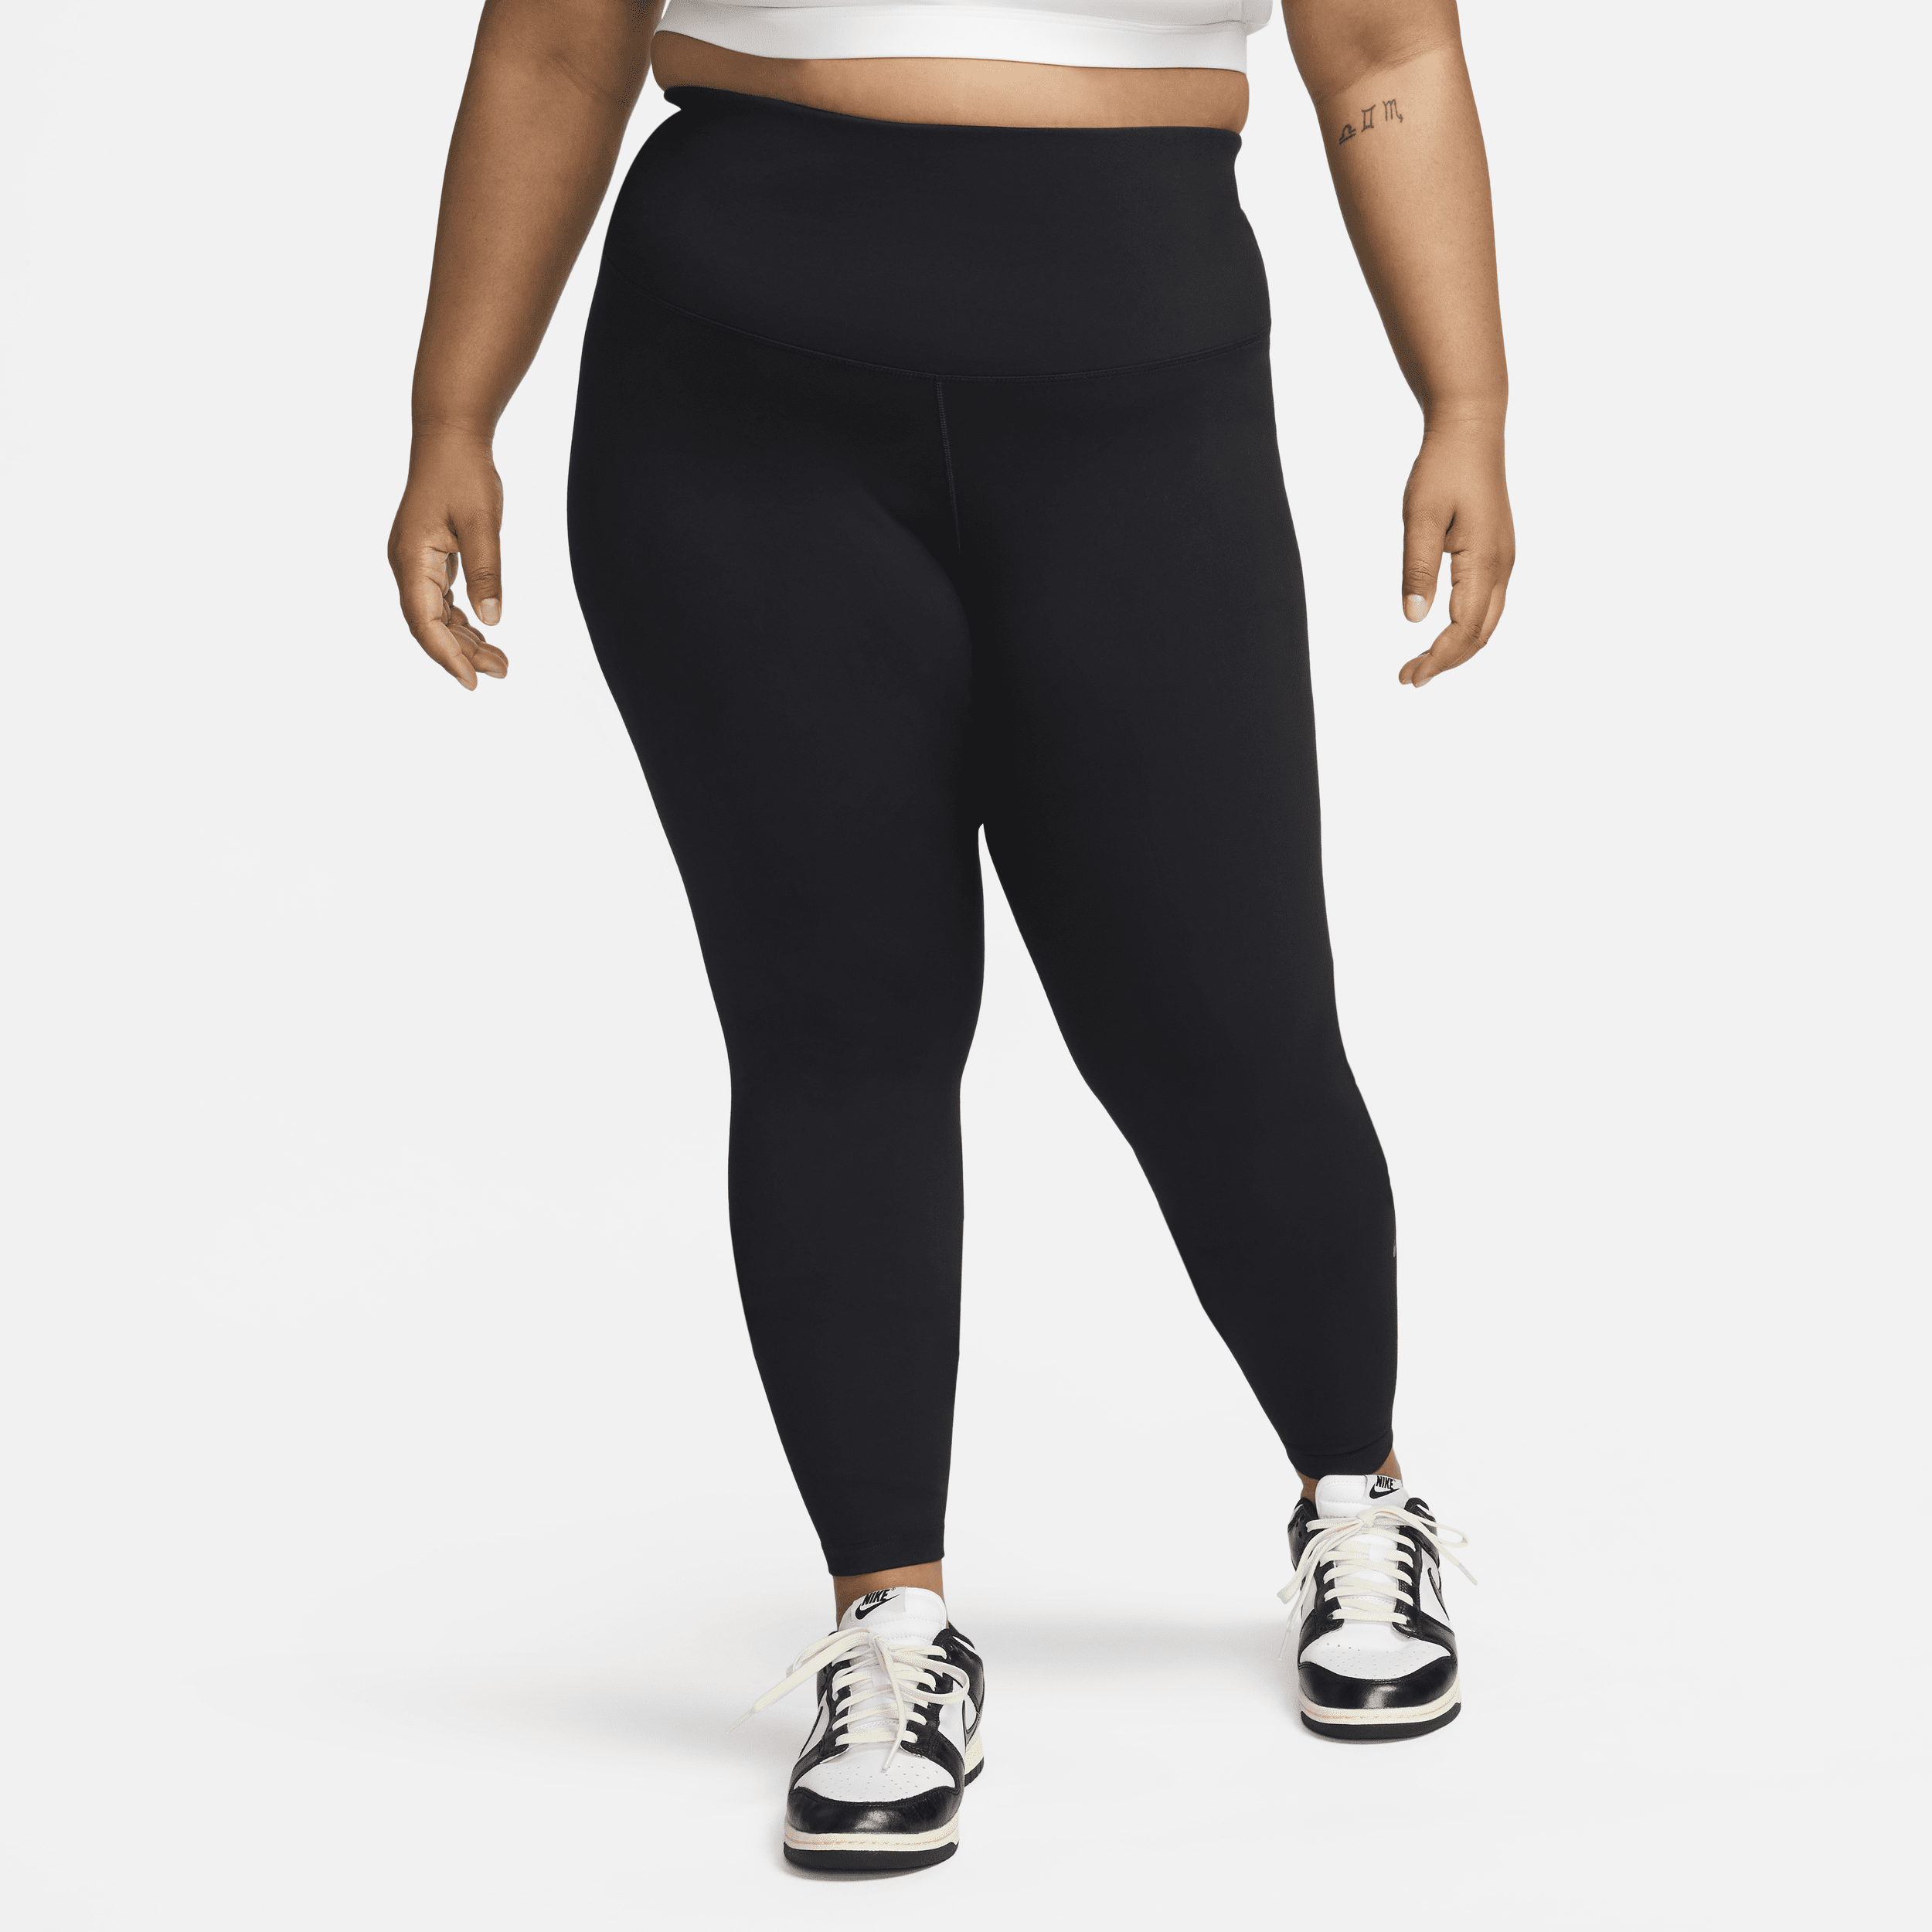 Leggings a tutta lunghezza a vita alta Nike One – Donna - Nero